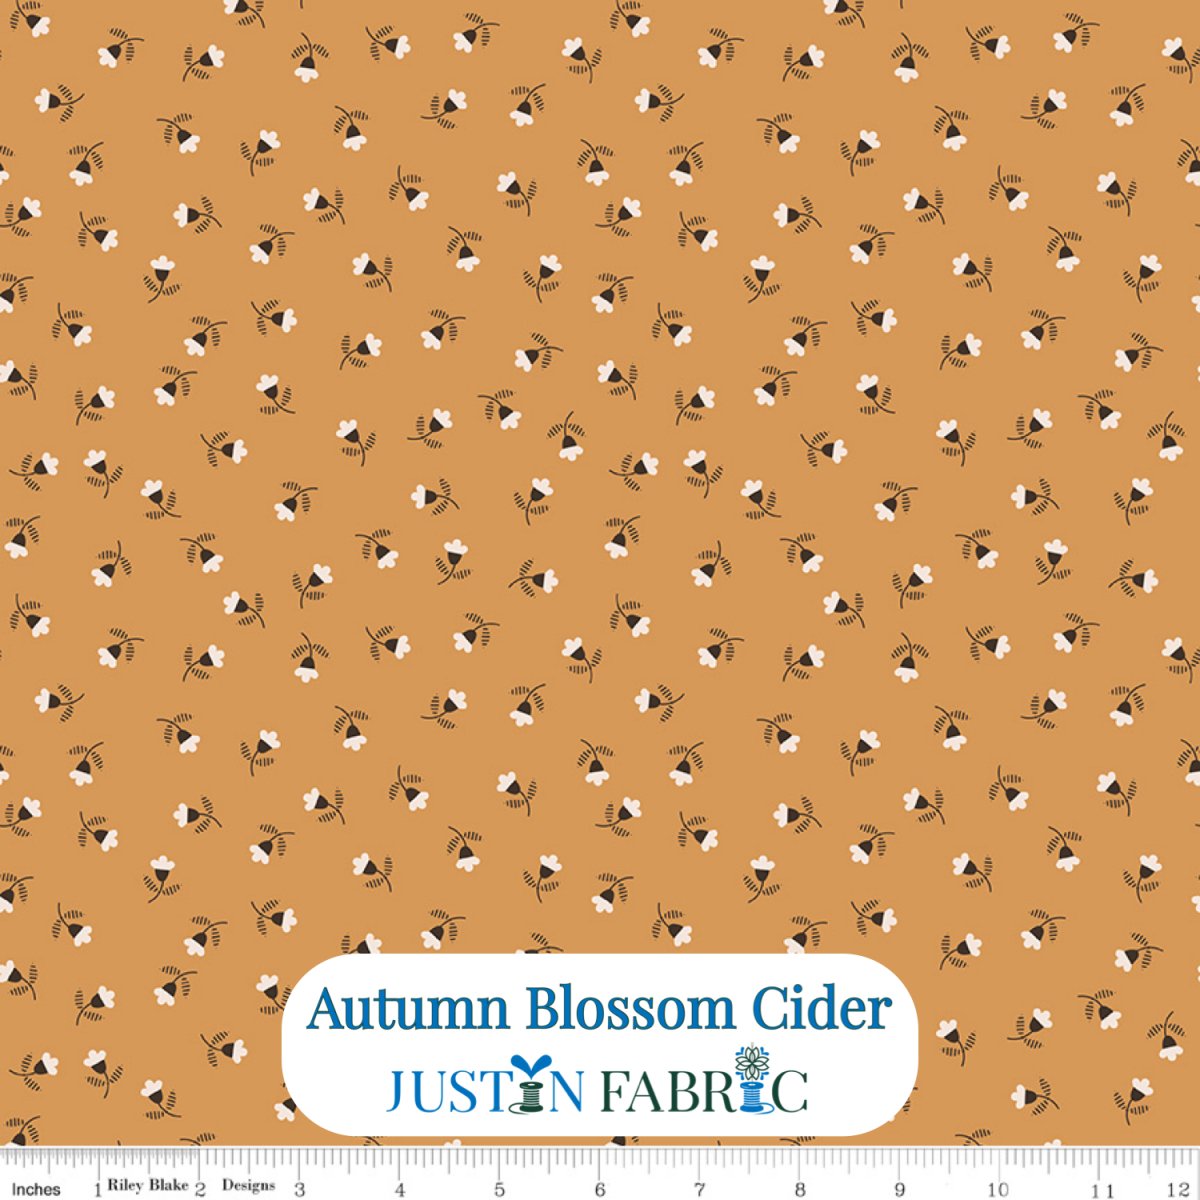 Autumn Blossom Cider Cotton Yardage by Lori Holt | Riley Blake Designs -C14654-CIDER - Justin Fabric!